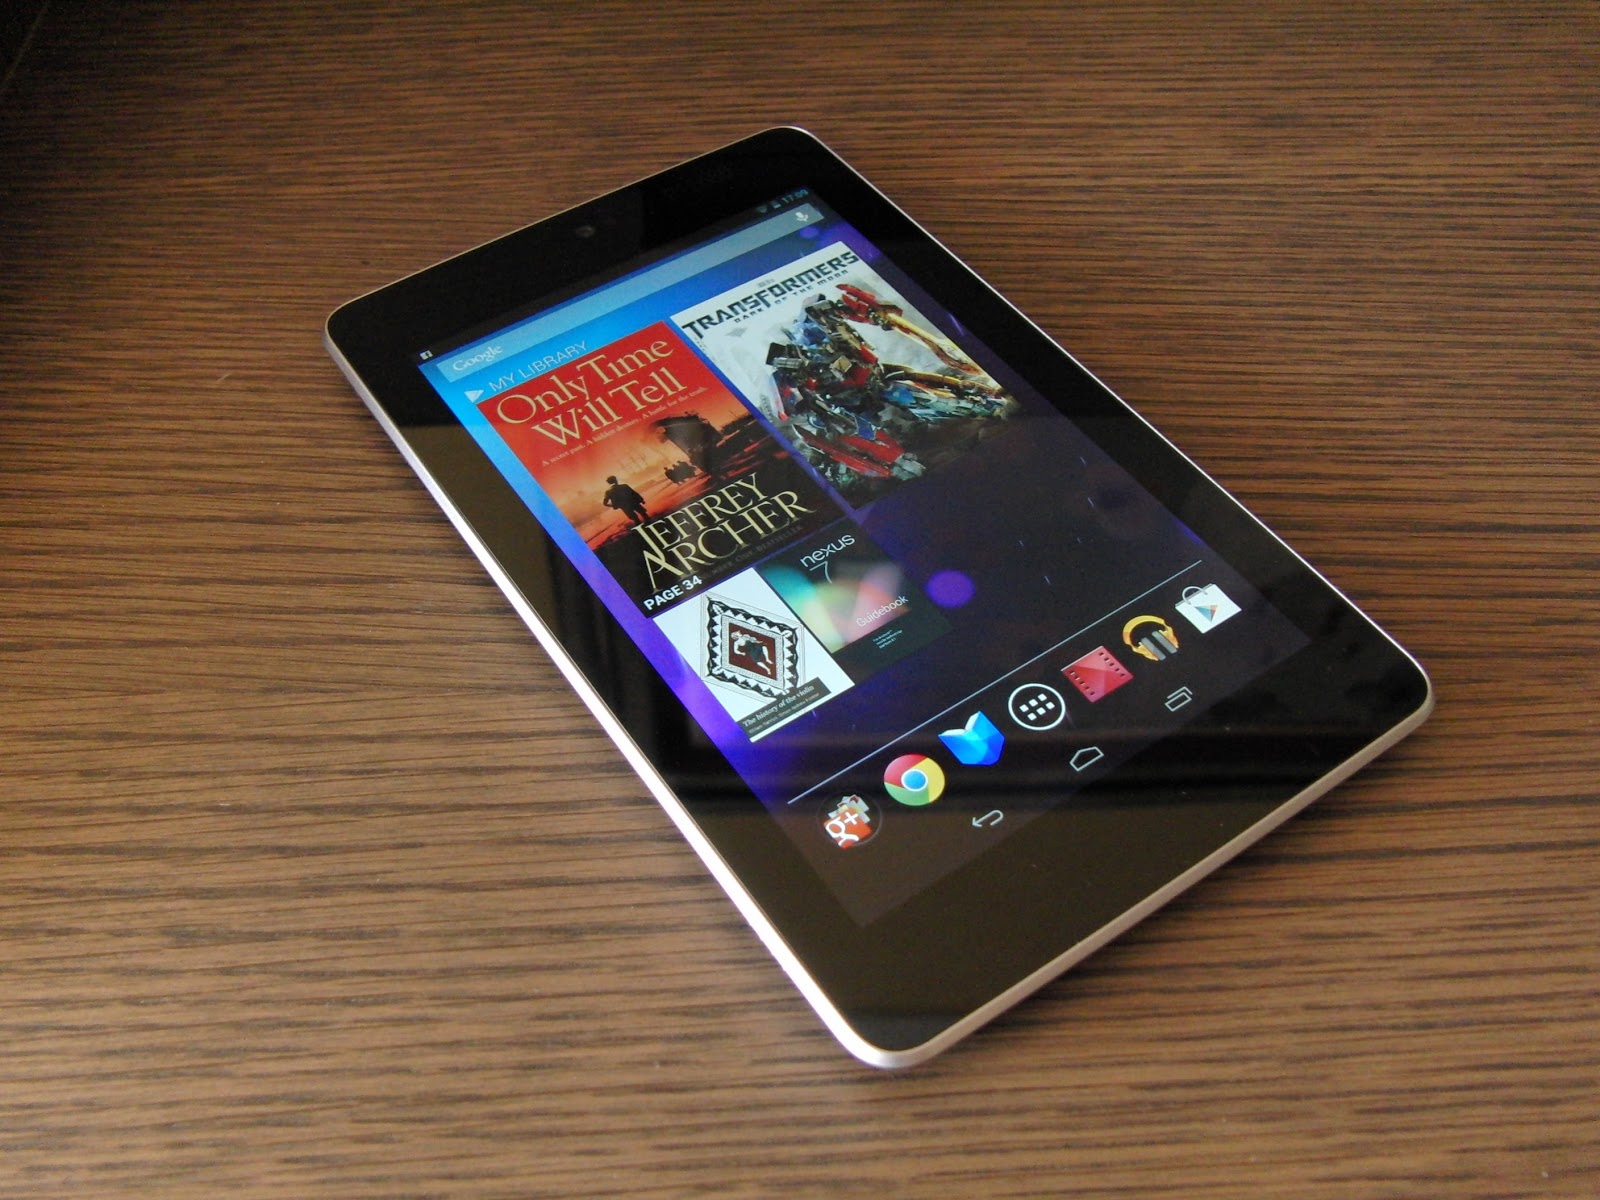 Google Nexus 7 3g Version Price